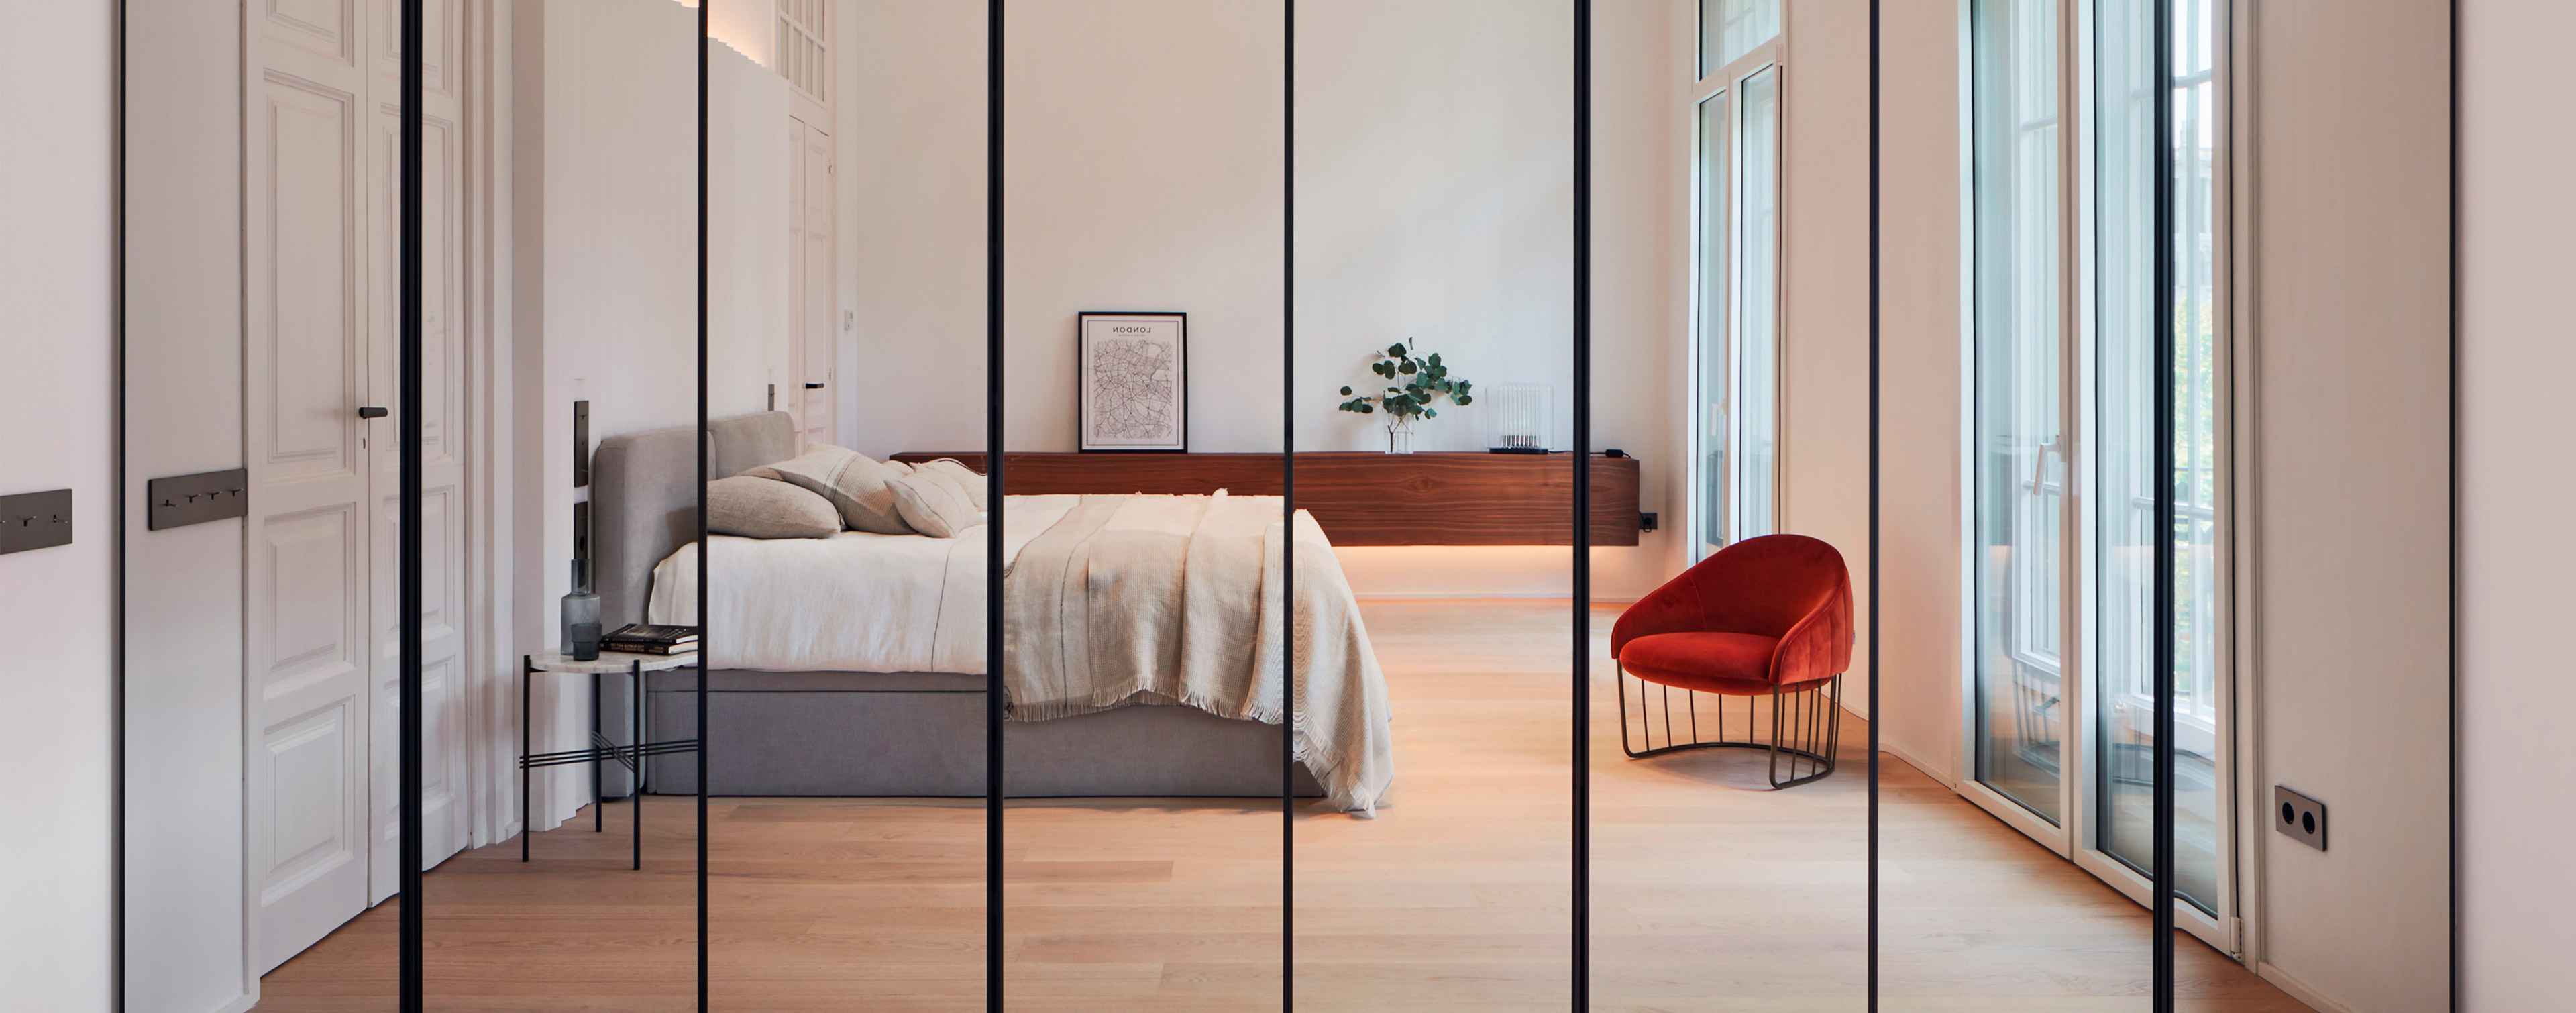 luv studio luxury architects barcelona diagonal apartment IMG 02 - LUV Studio - Architecture & Design - Barcelona